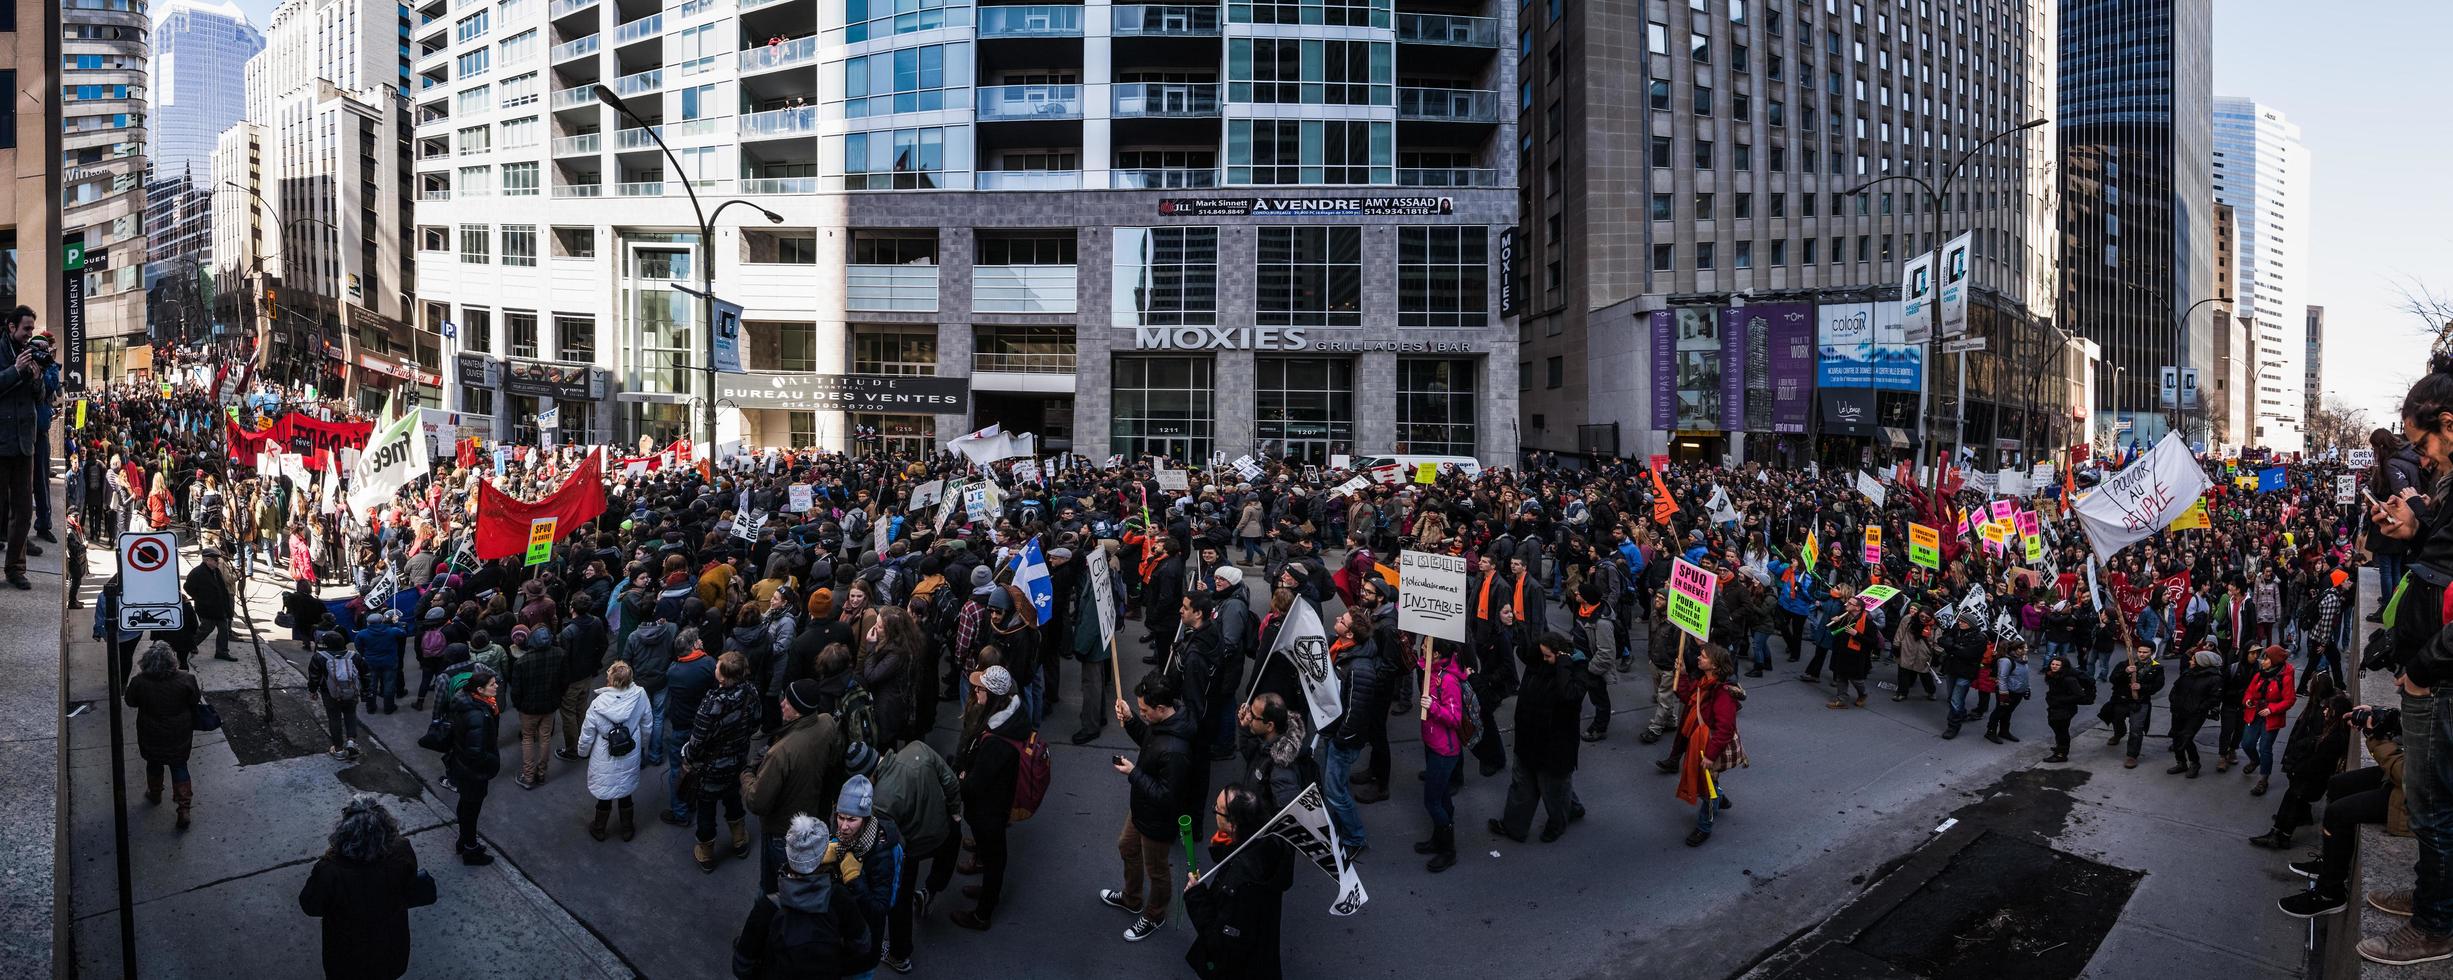 Montreal, Kanada 2. April 2015 - Panoramablick auf die Straßen voller Demonstranten foto